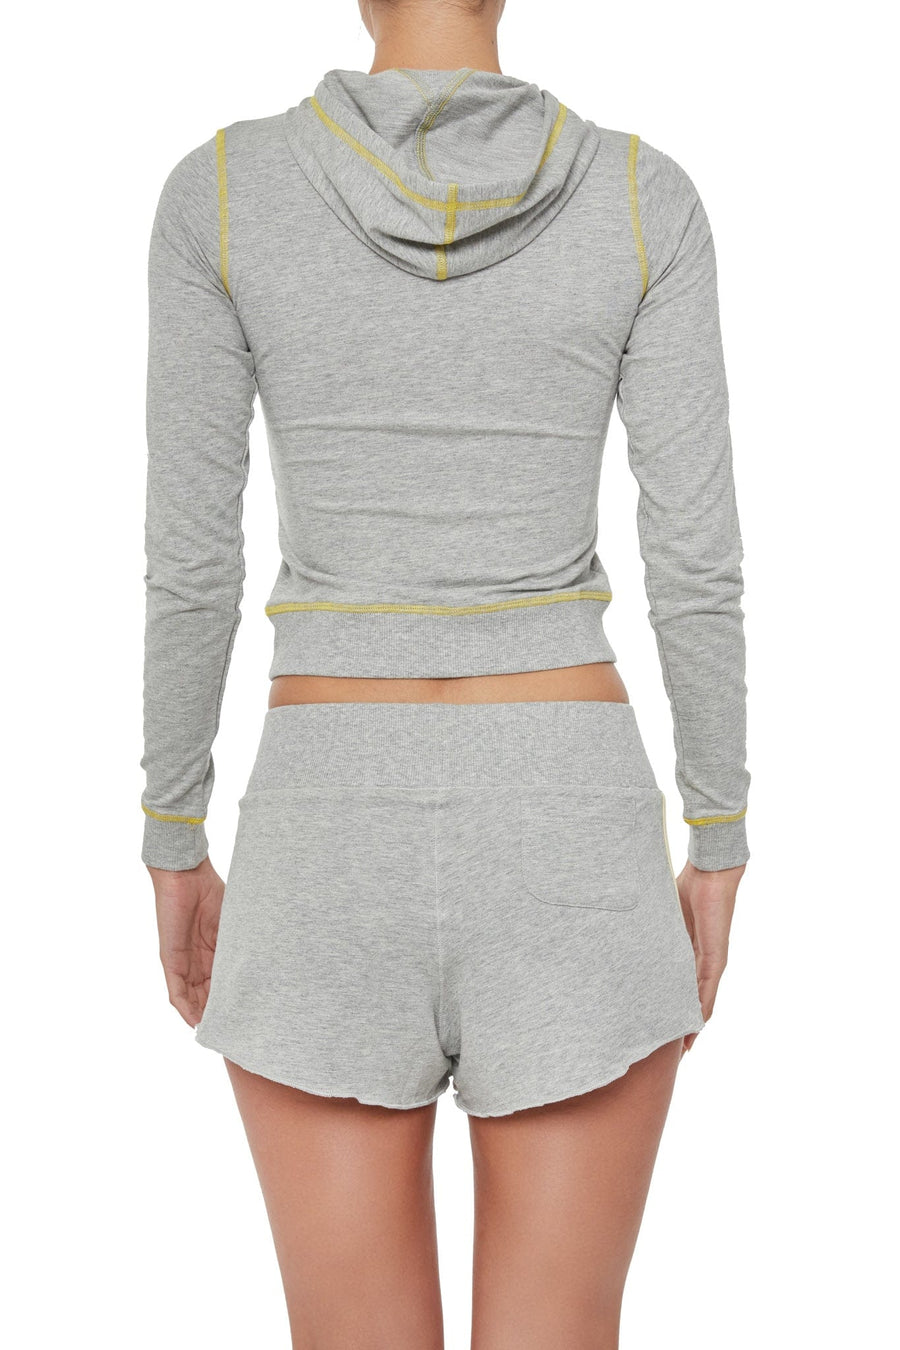 ESPRITE shorts- grey/ lemon  -  CLOTHING  -  B Ā M B A S W I M